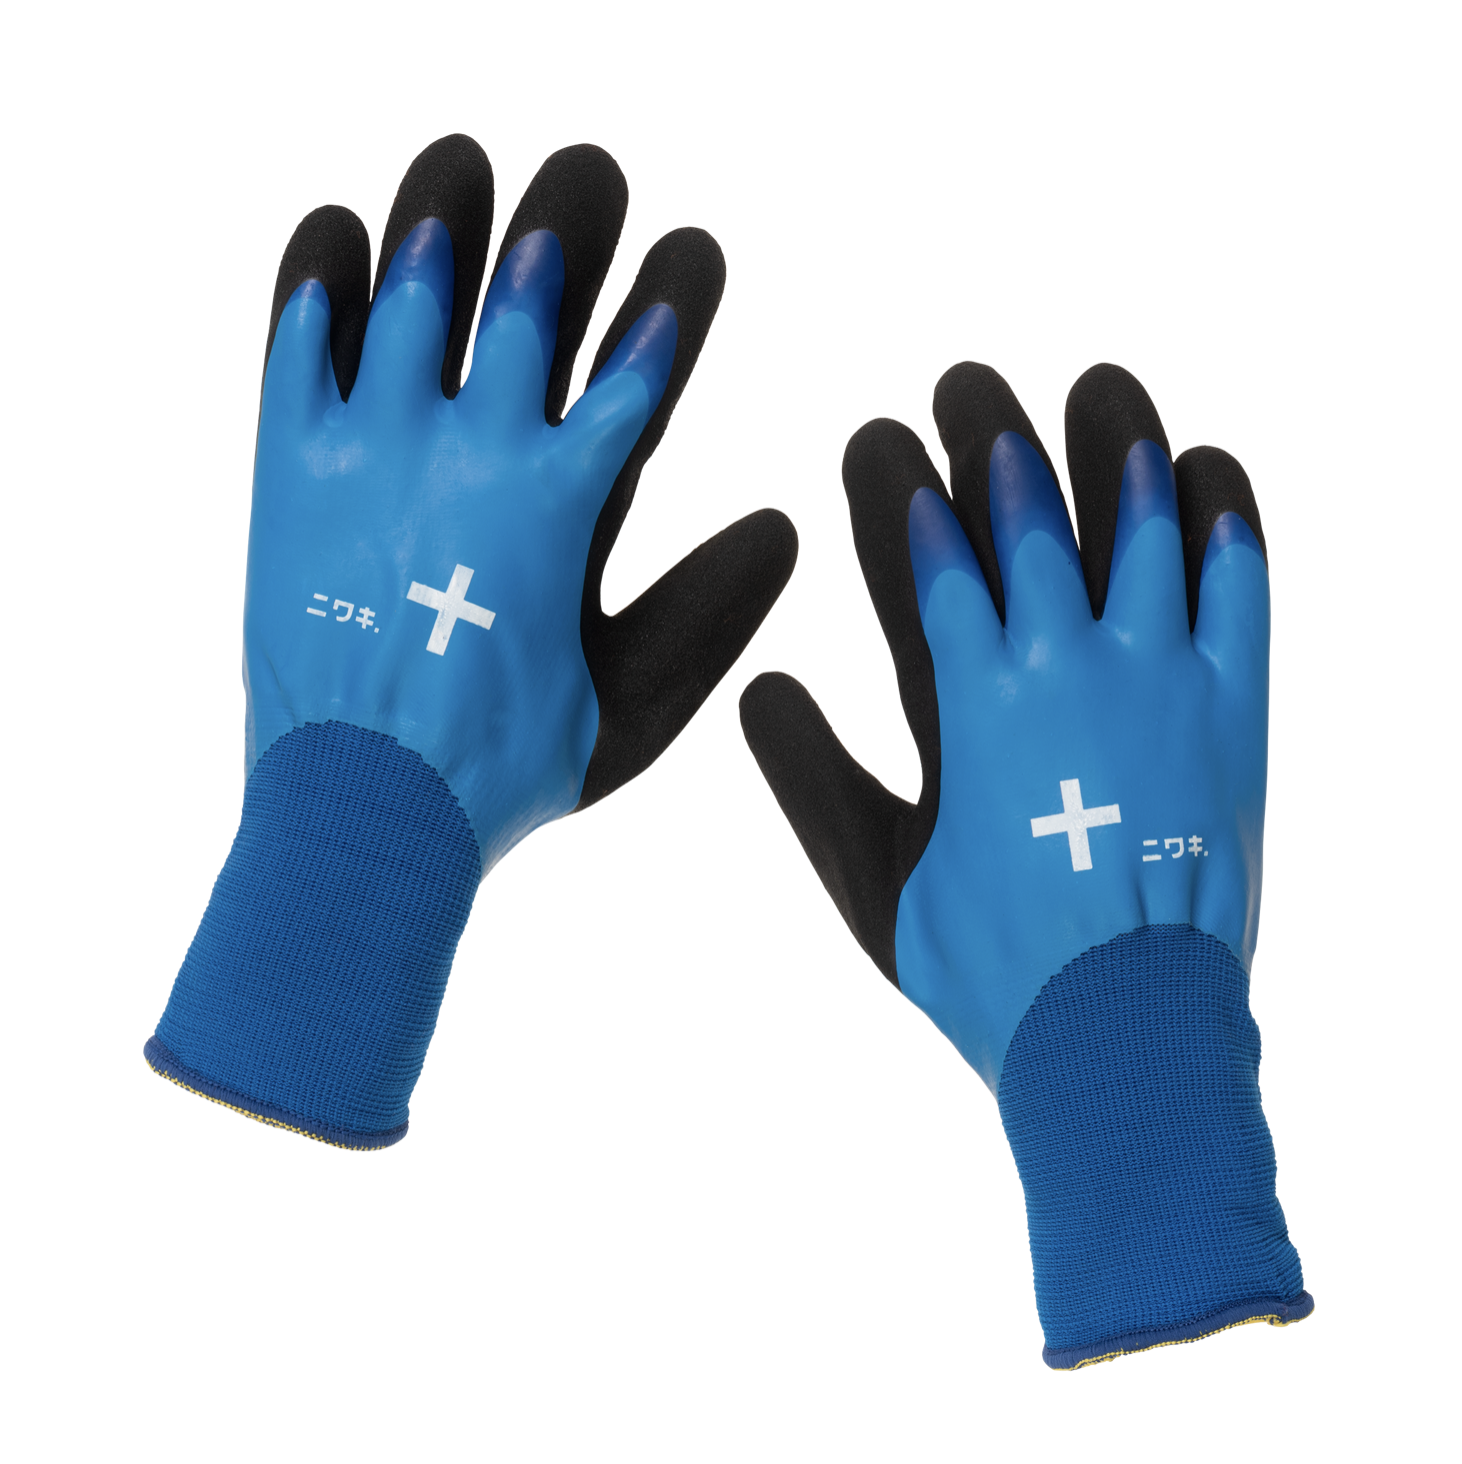 Niwaki Winter Gardening Gloves Extra Large 10